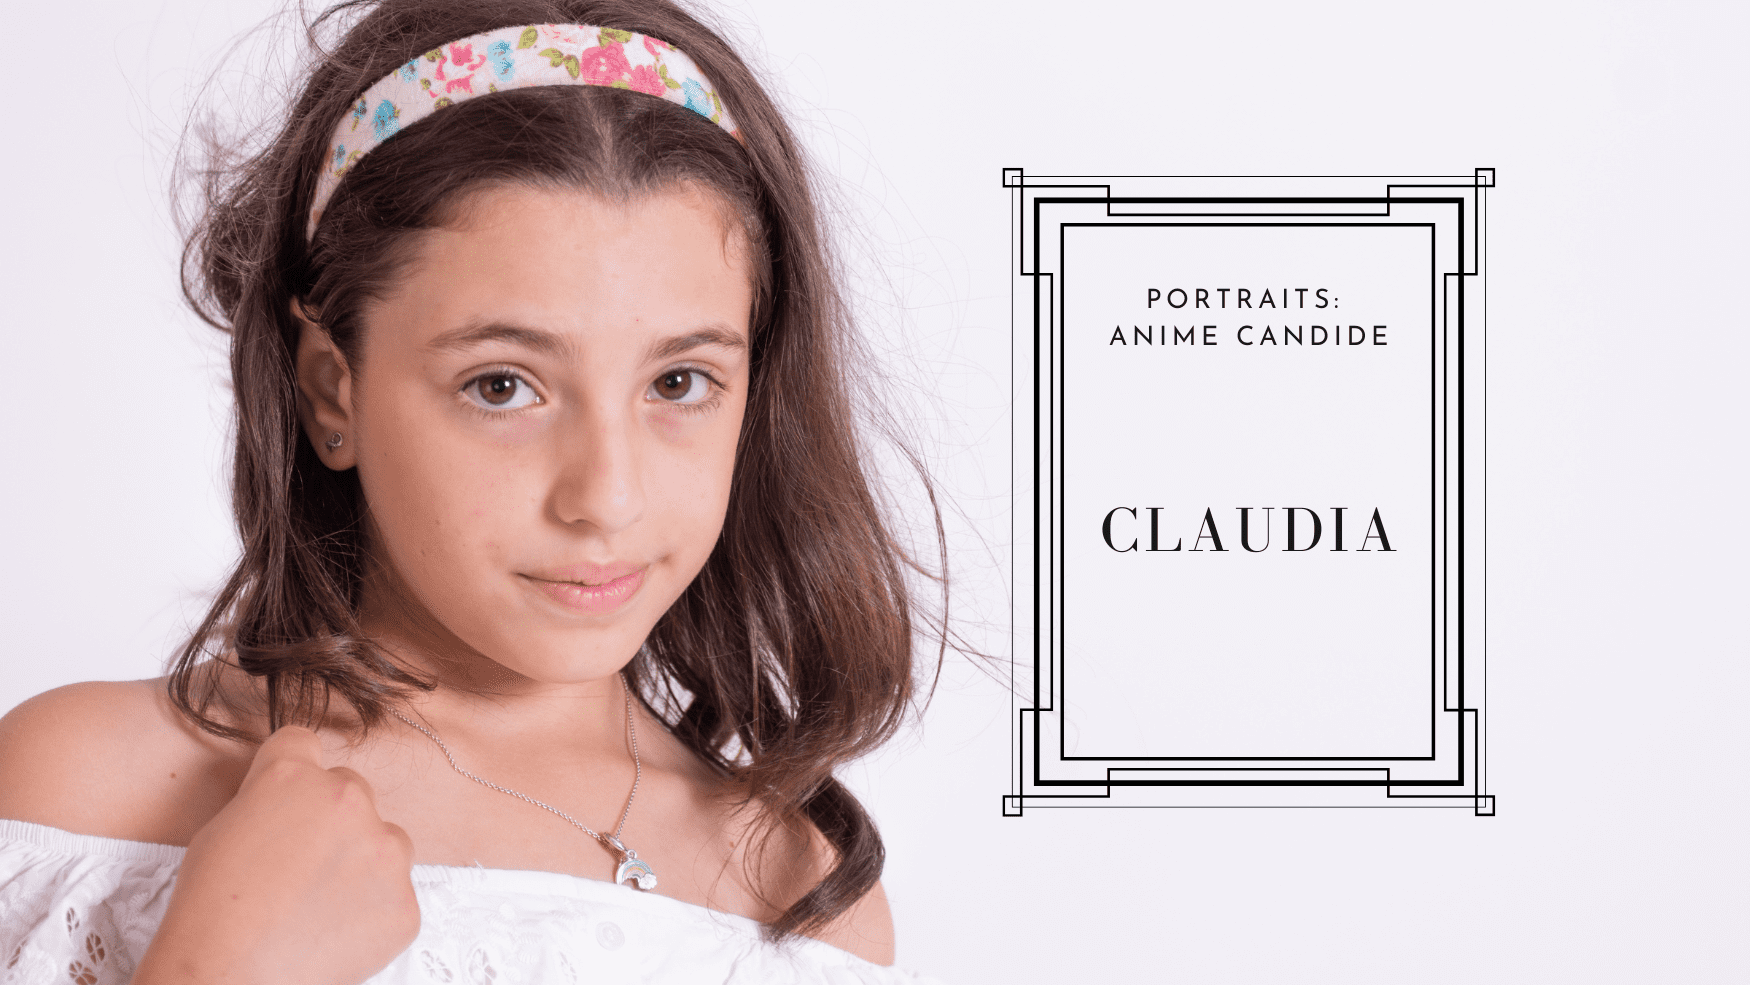 Portraits Anime Candide: Claudia